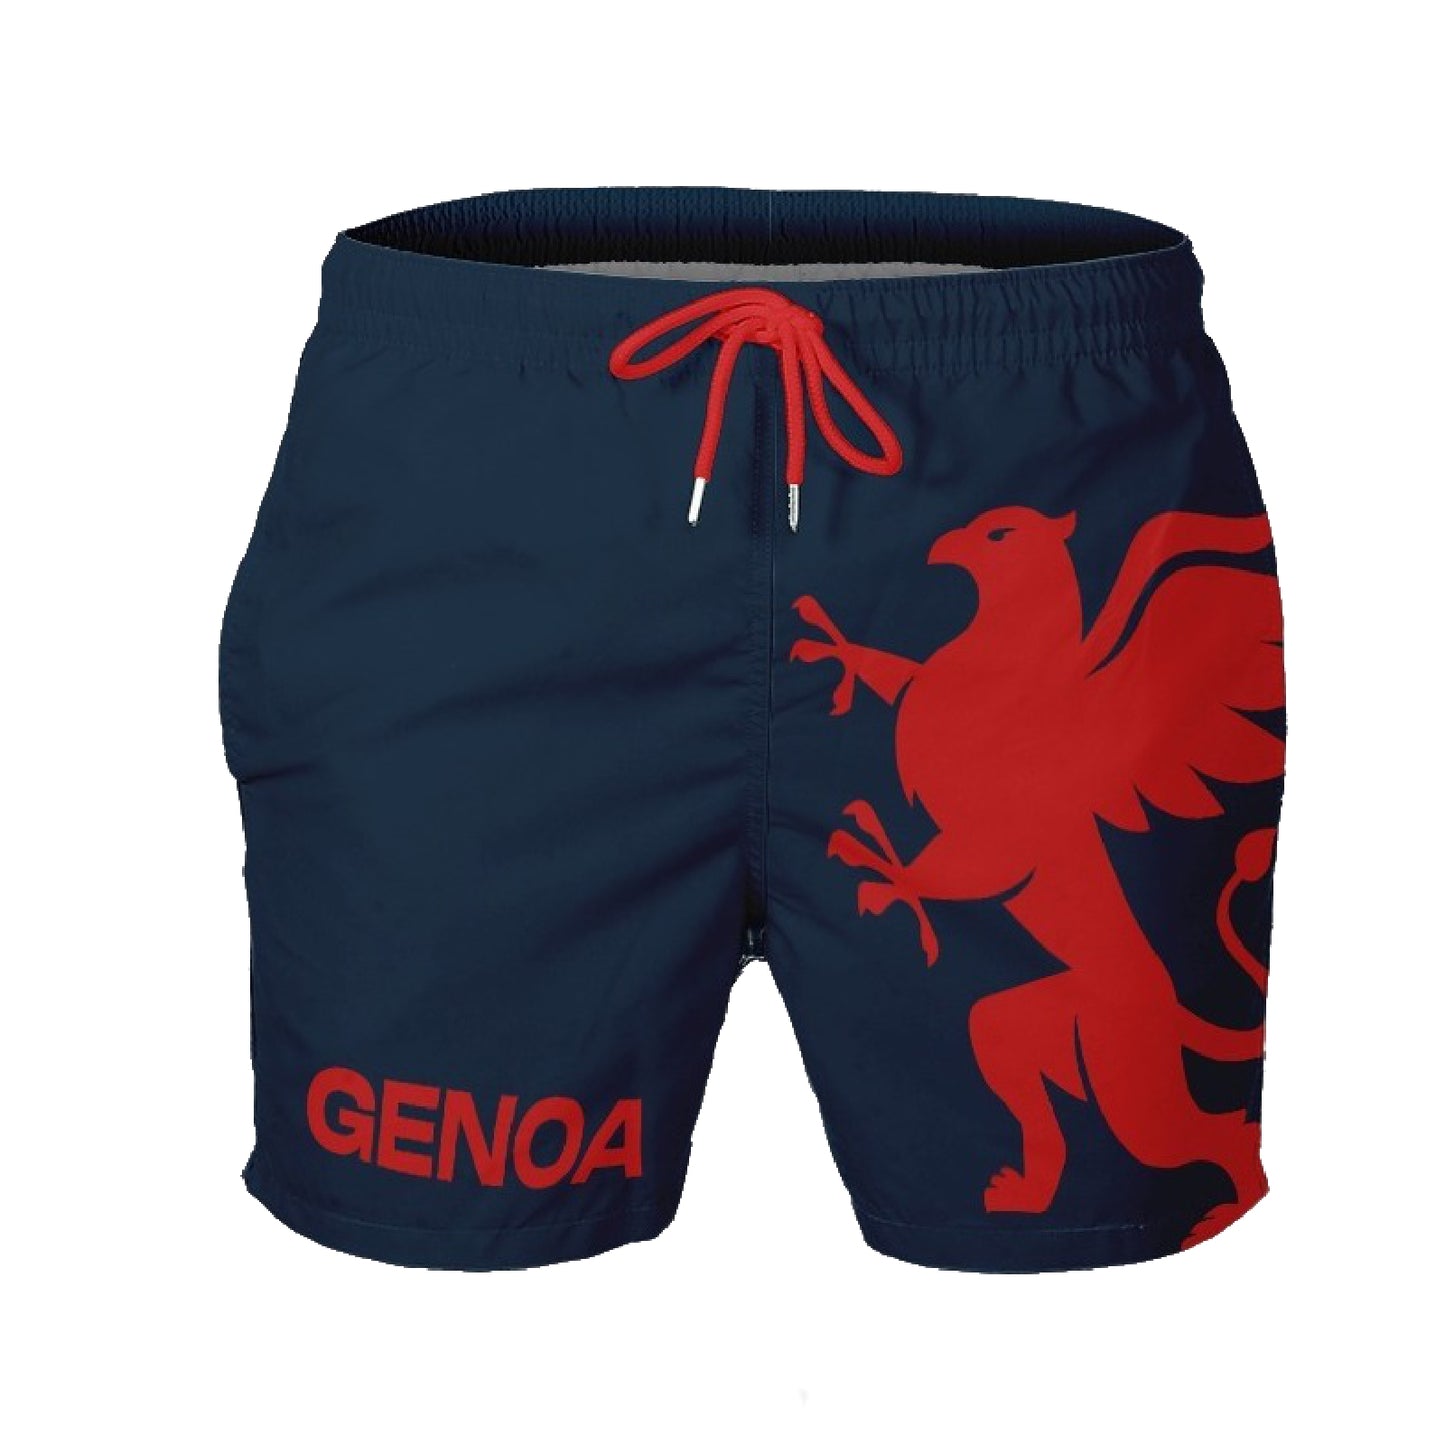 Boxer Genoa Navy